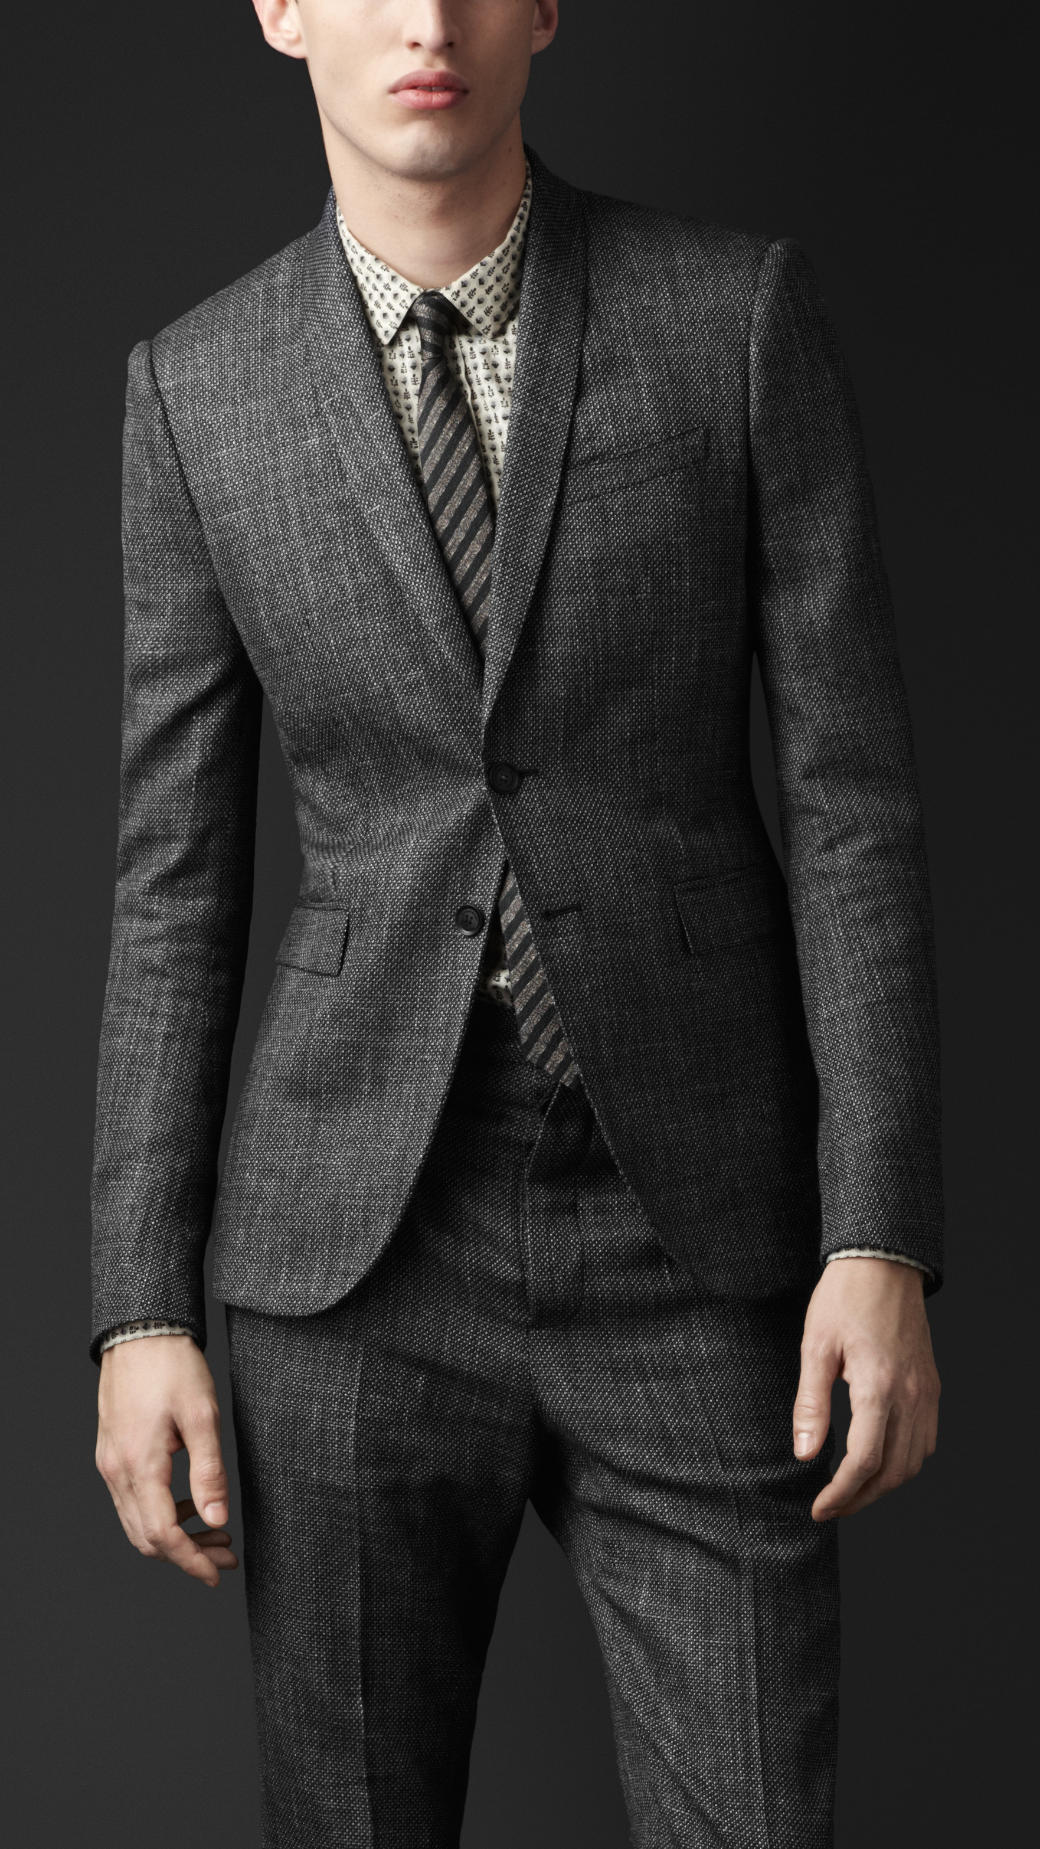 Lyst - Burberry Prorsum Slim Fit Tweed Jacket in Gray for Men